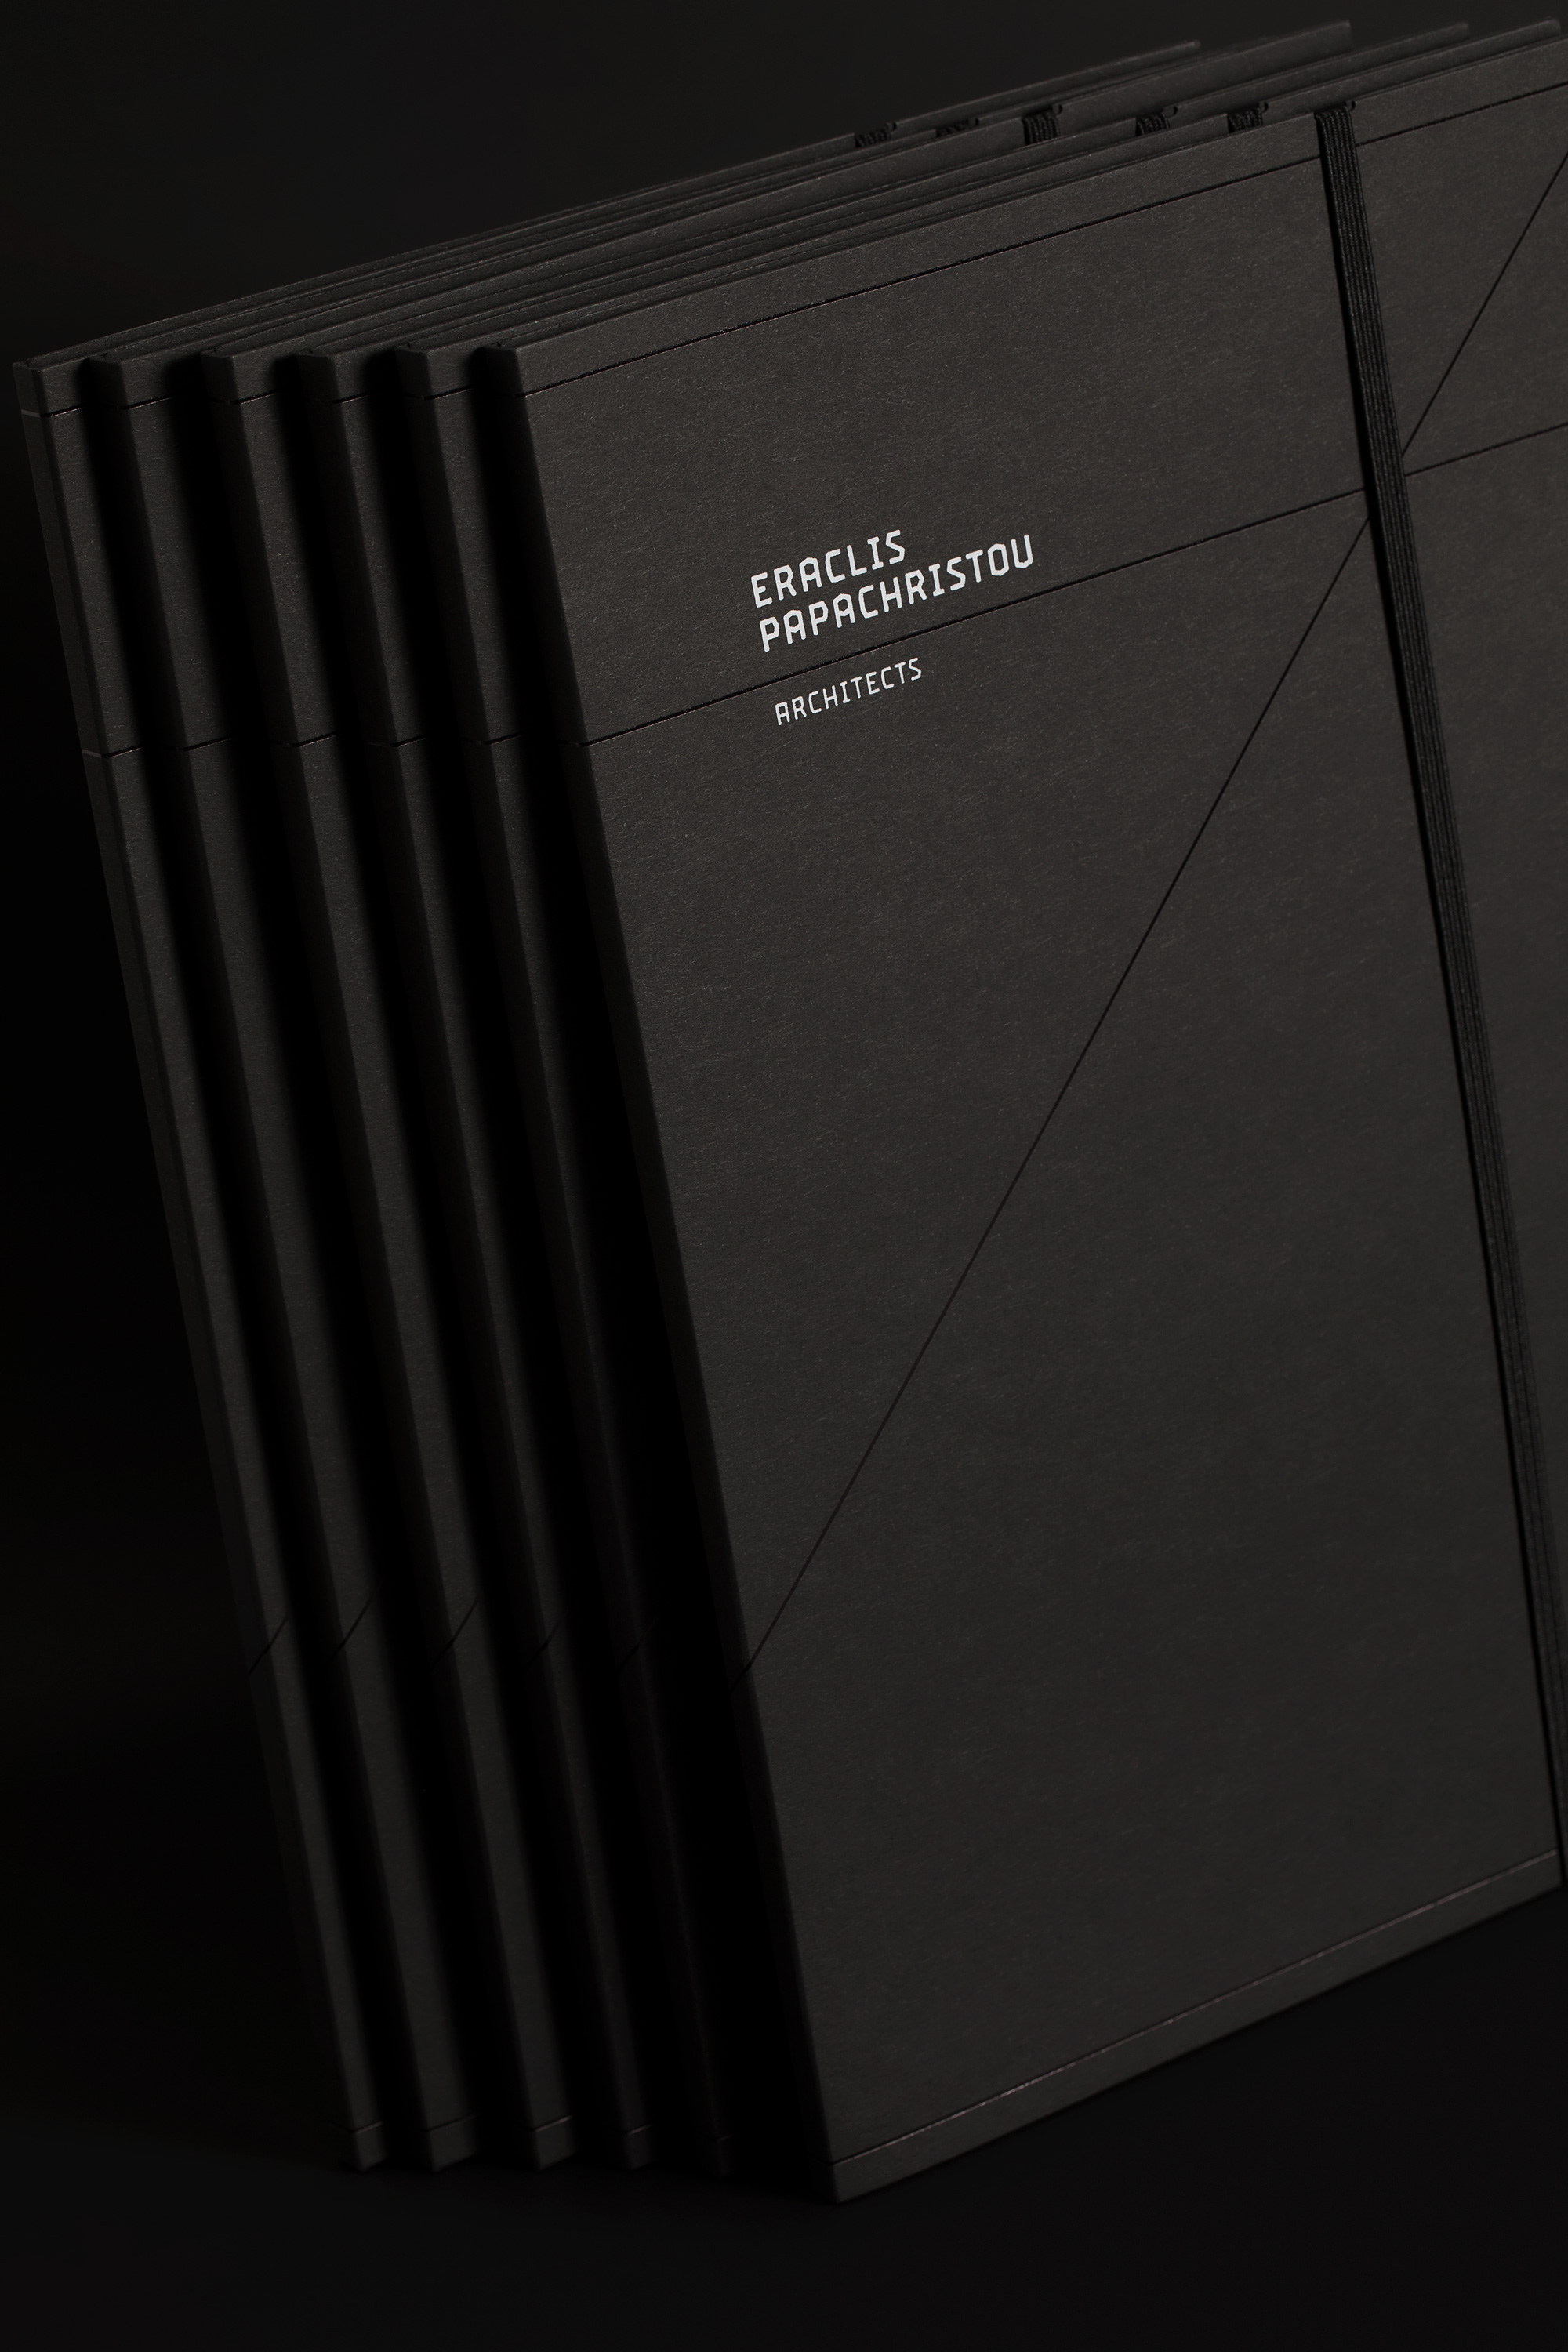 papachristou branding folders stack kommigraphics